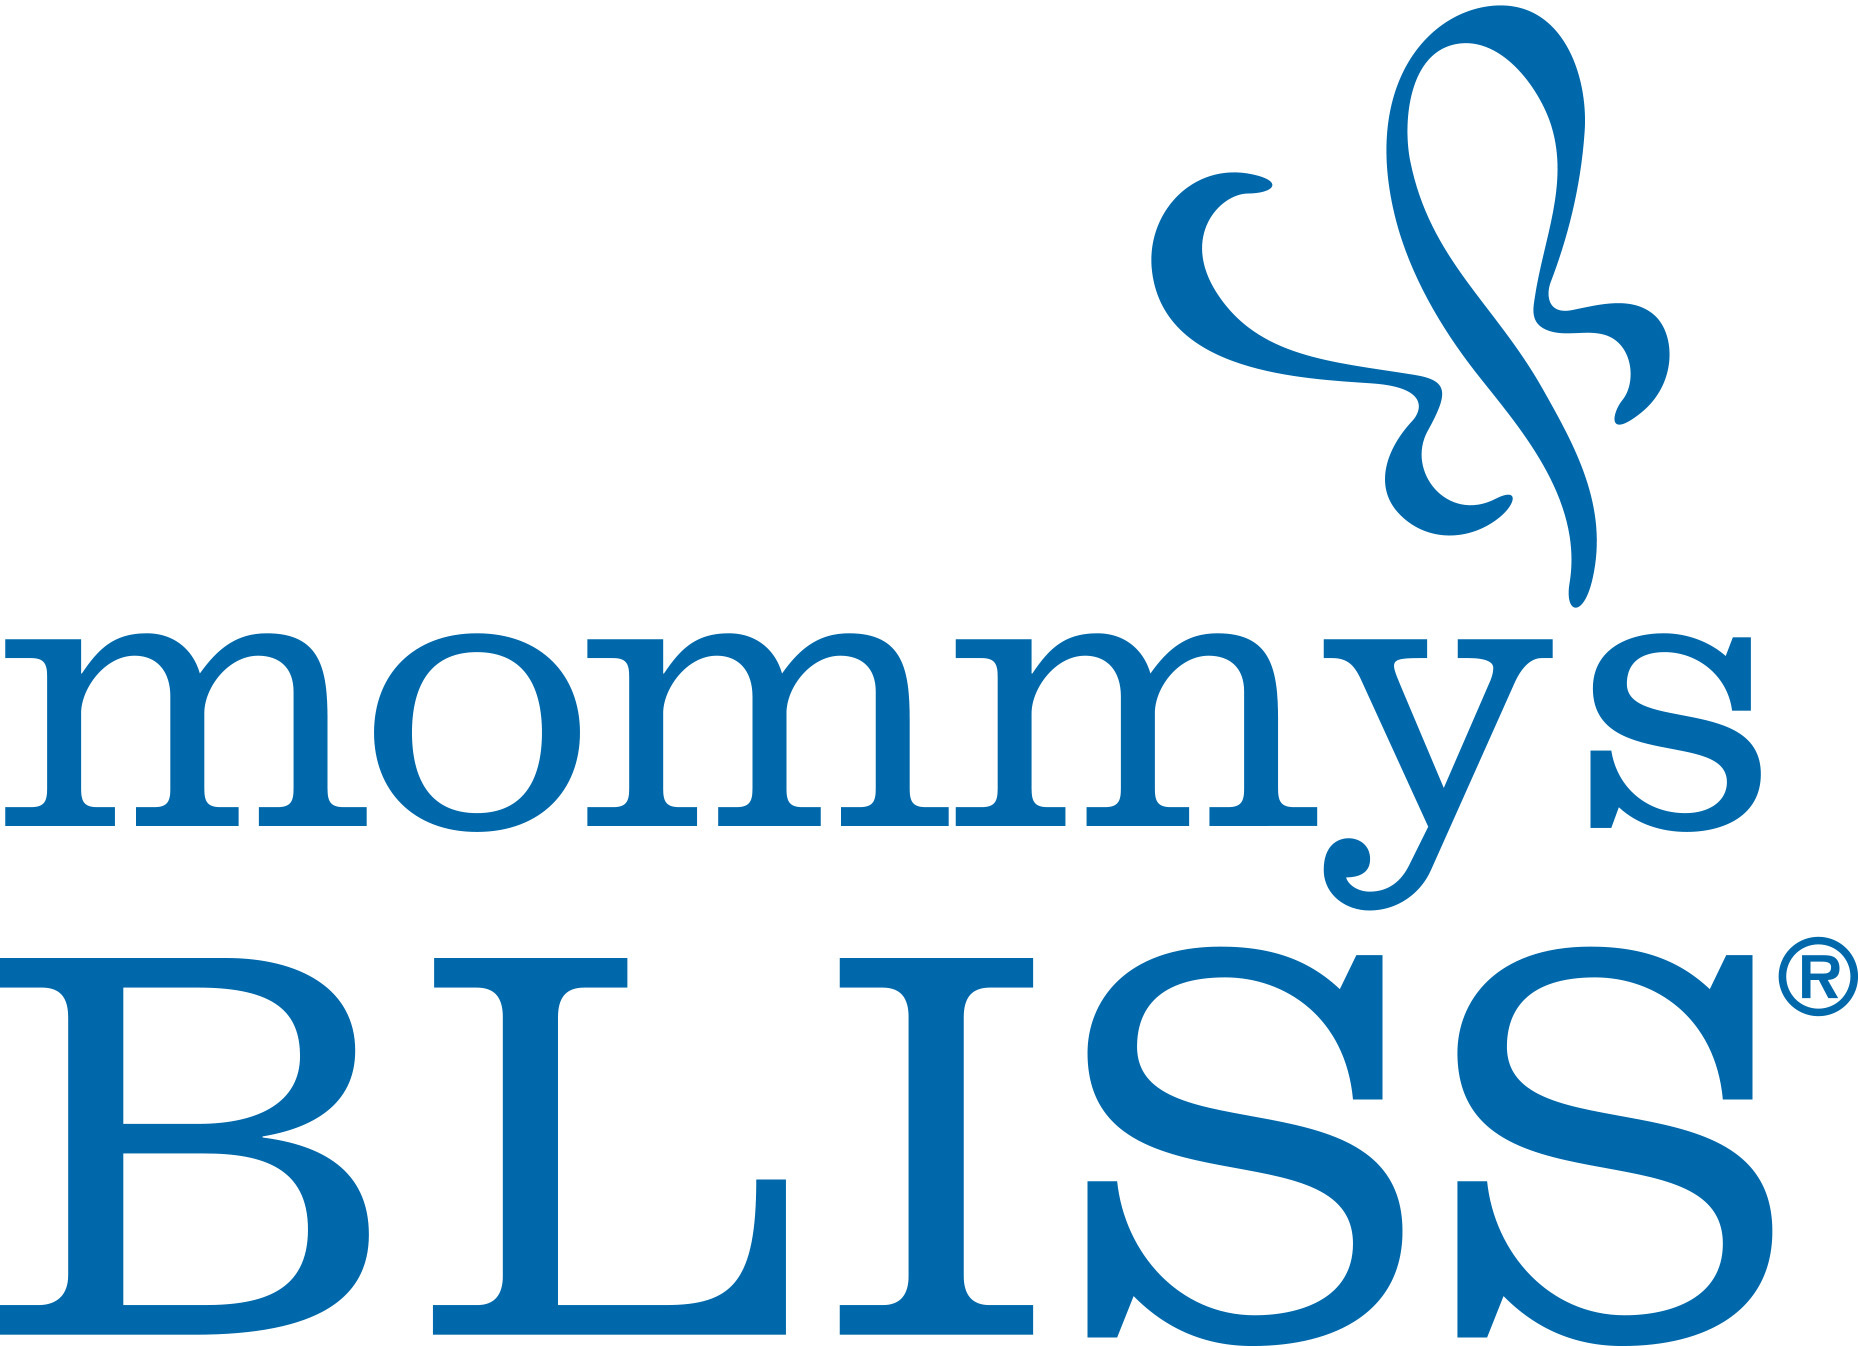 https://mma.prnewswire.com/media/1191756/Mommys_Bliss_Logo.jpg?p=publish